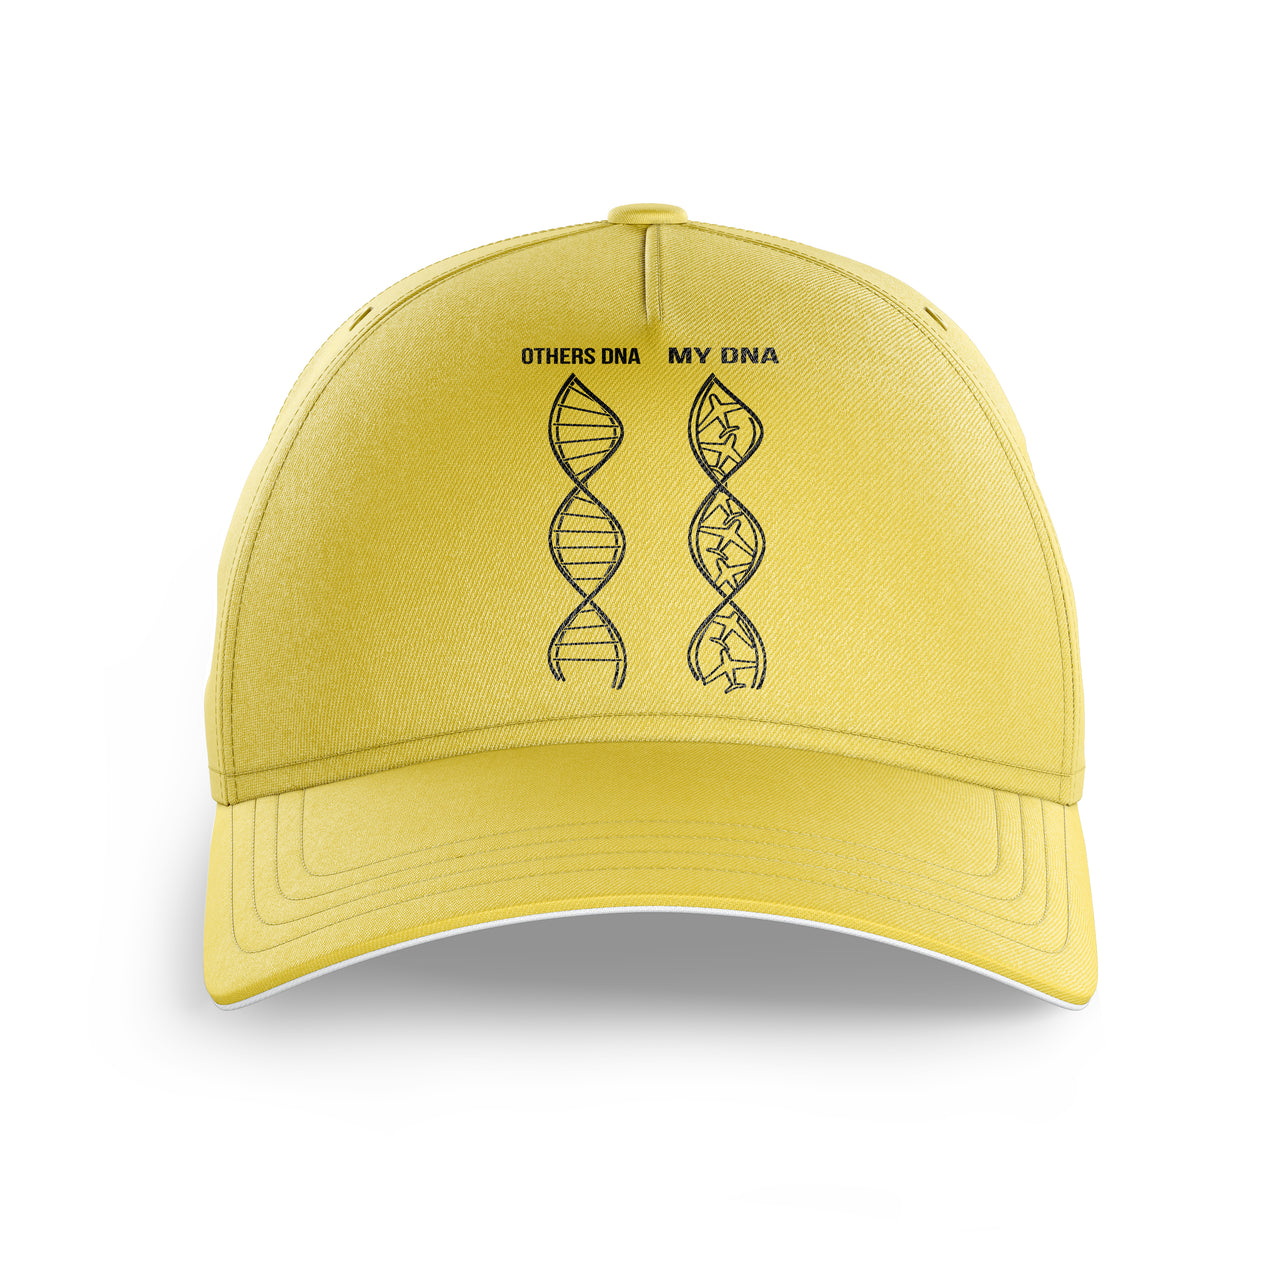 Aviation DNA Printed Hats